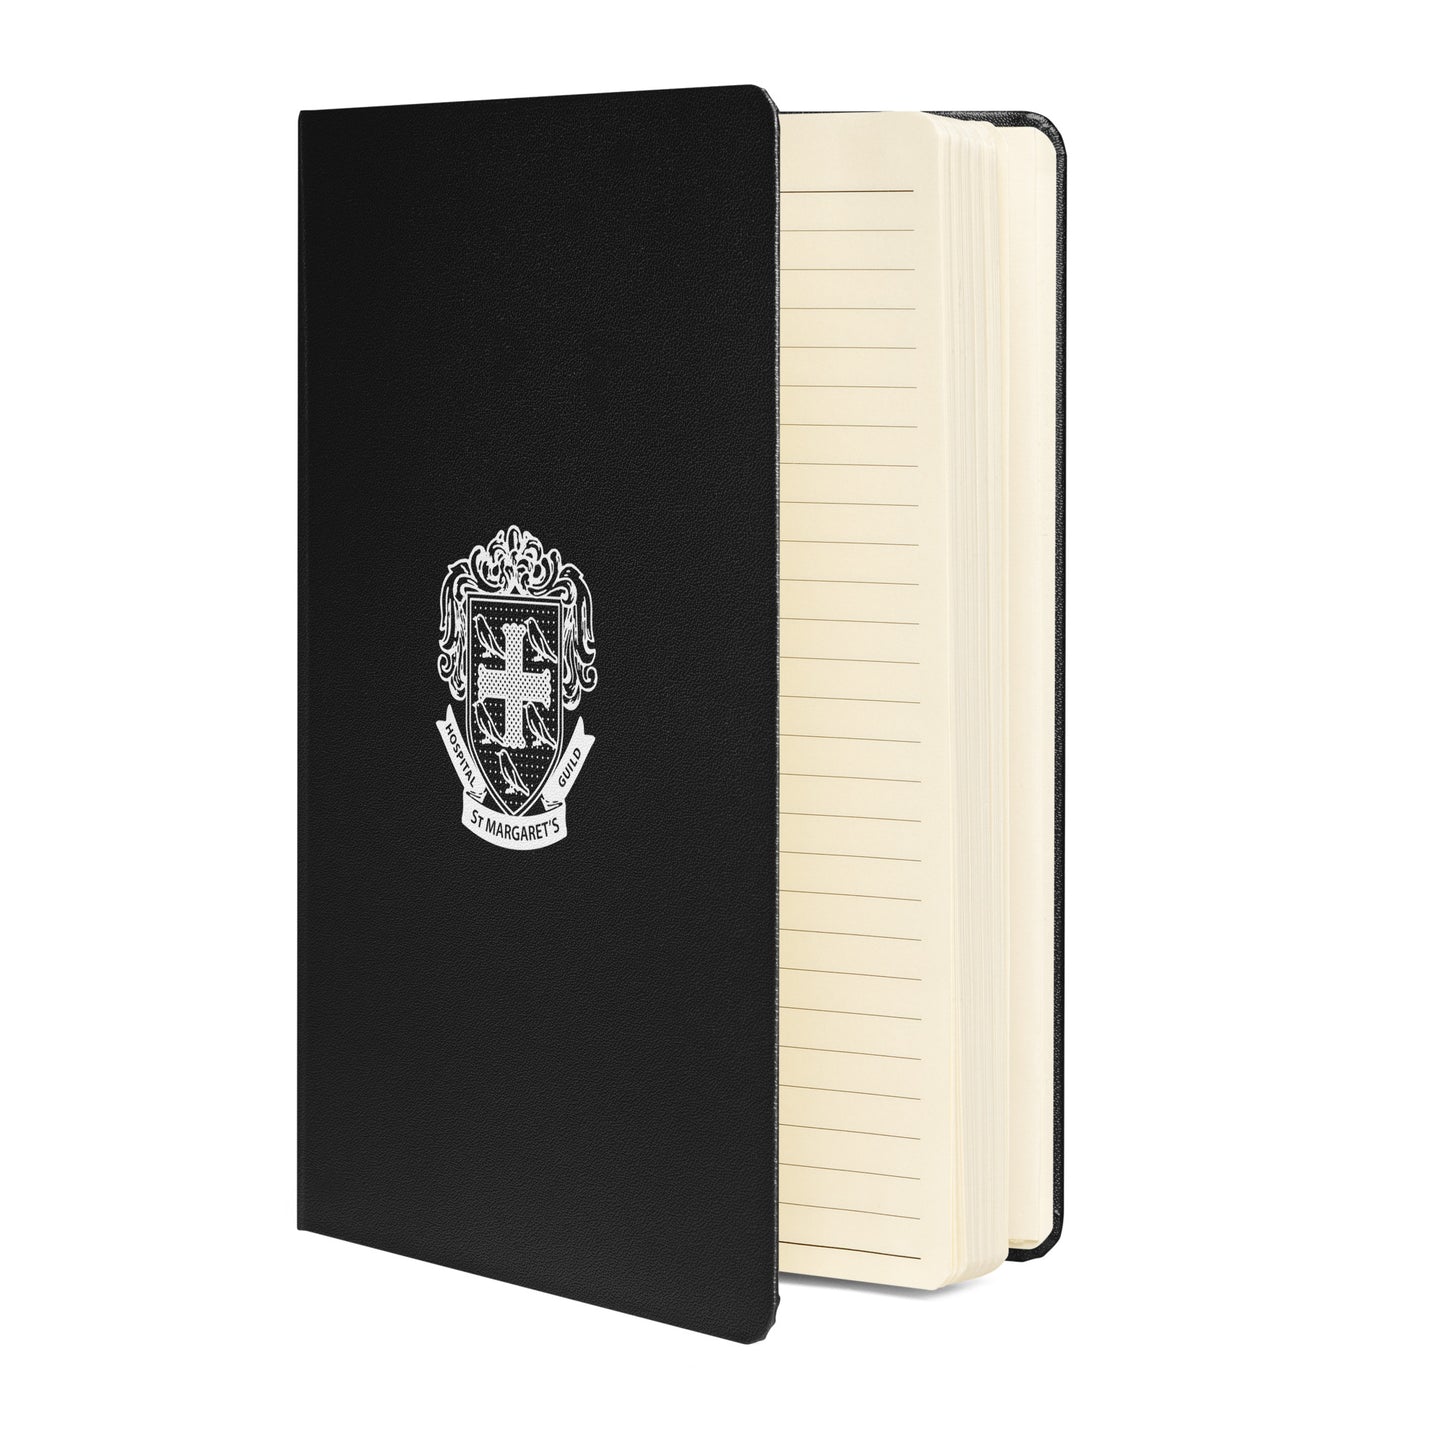 St. Margaret's Hardcover bound notebook